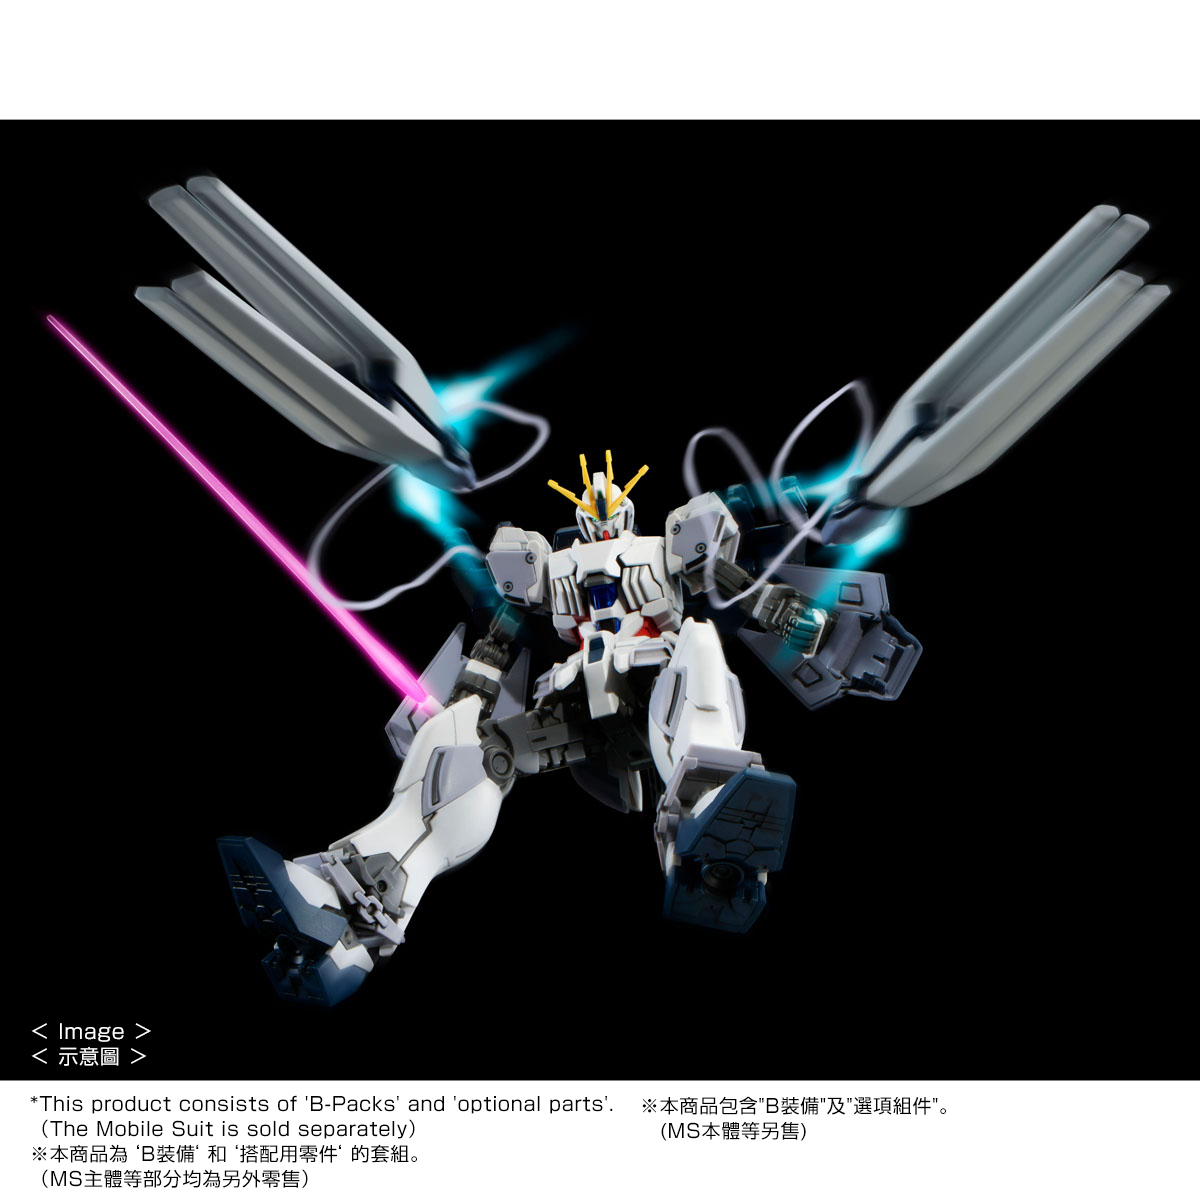 Hg 1 144 B Packs Expansion Set For Narrative Gundam Gundam Premium Bandai Singapore Online Store For Action Figures Model Kits Toys And More